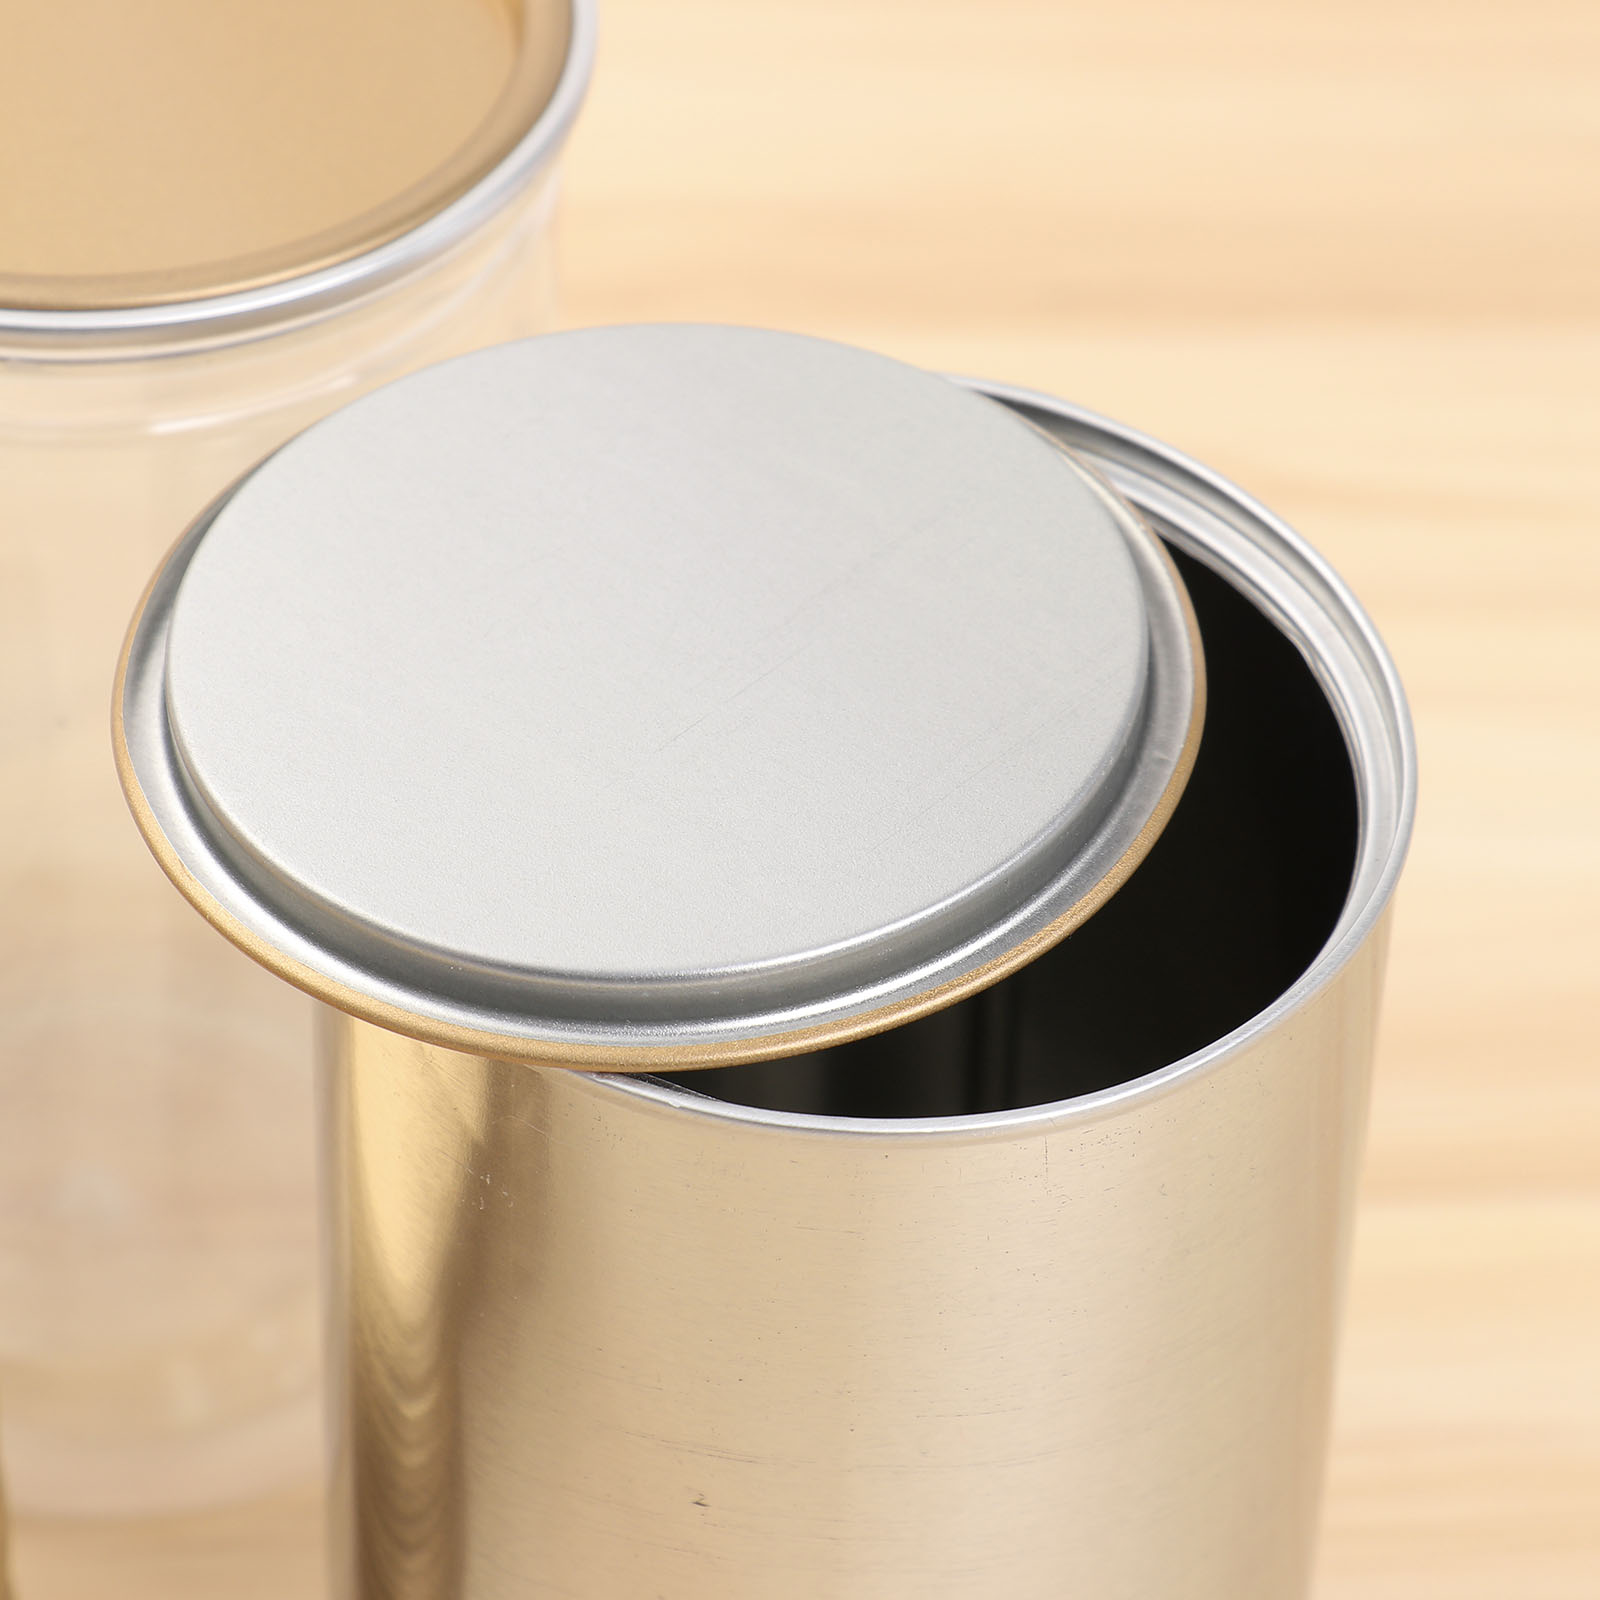 50 Tinplate Sealing Canning Lids Regular Wide Mouth Mason Jar Lids Kitchen Food Storege Leak Proof Glass Jar Storage Canning Lid